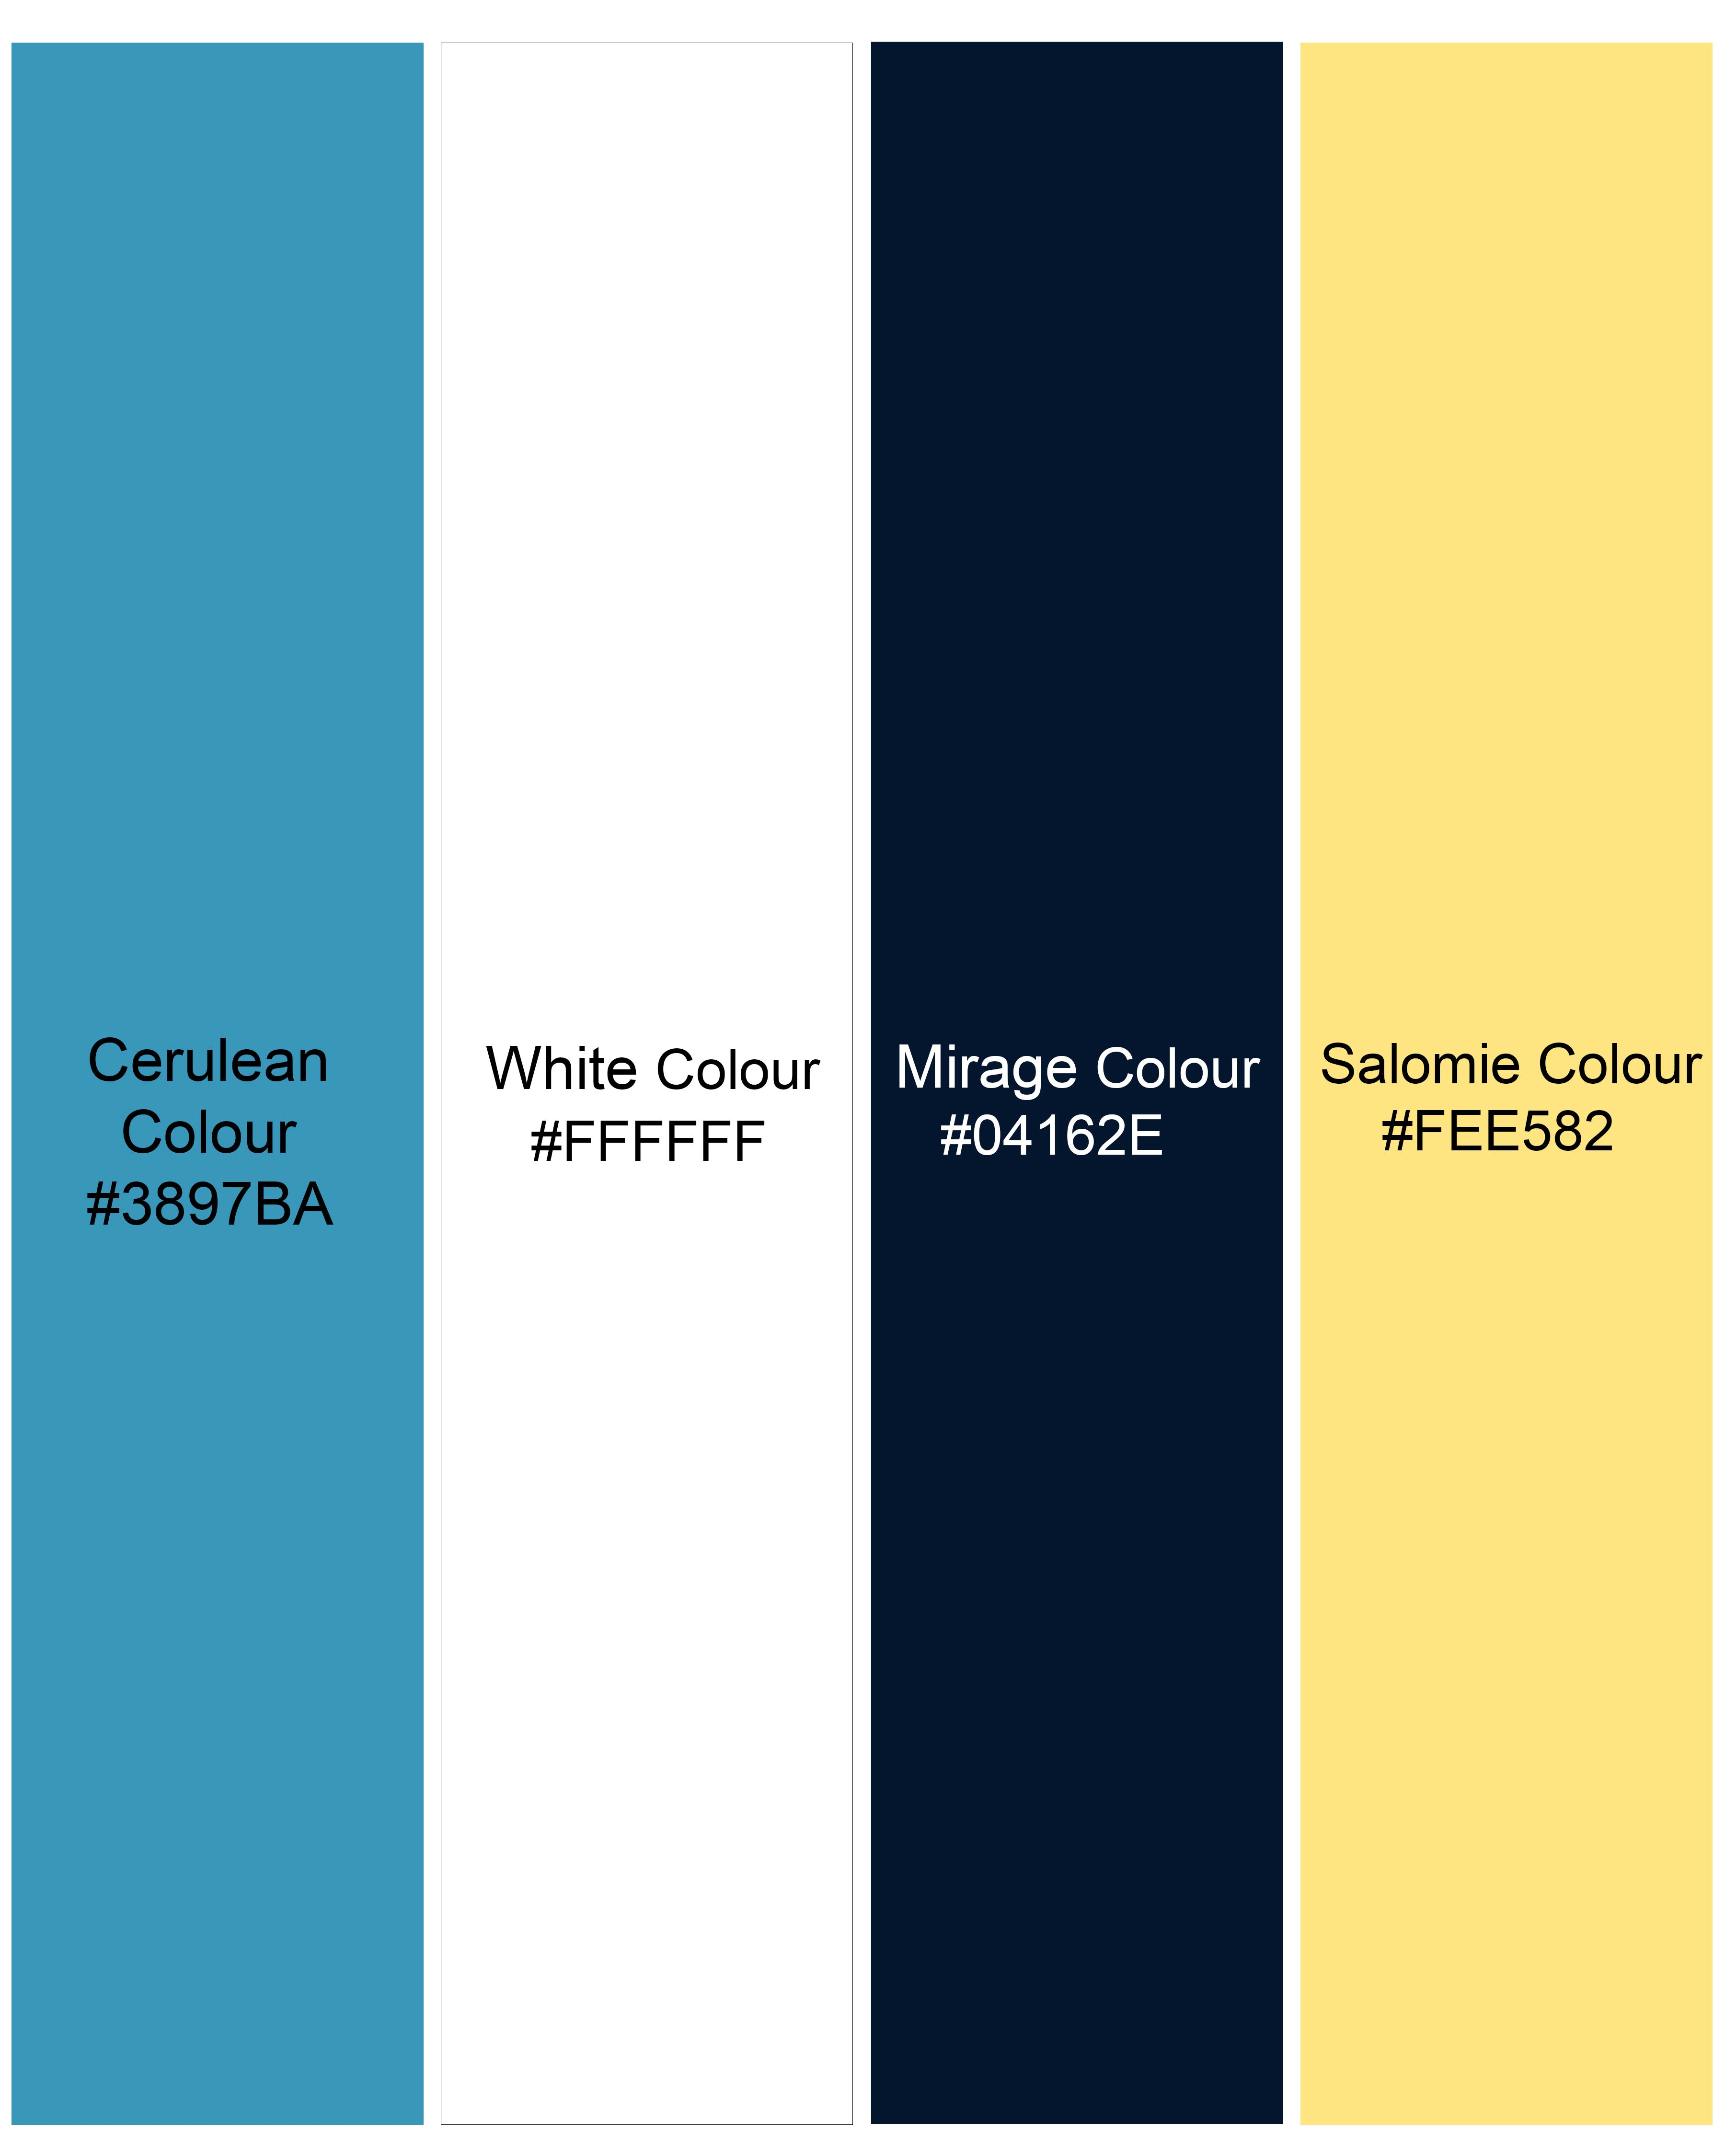 Cerulean Blue with White and Mirage Black Plaid Premium Cotton Designer Shirt  8732-P71-38,8732-P71-H-38,8732-P71-39,8732-P71-H-39,8732-P71-40,8732-P71-H-40,8732-P71-42,8732-P71-H-42,8732-P71-44,8732-P71-H-44,8732-P71-46,8732-P71-H-46,8732-P71-48,8732-P71-H-48,8732-P71-50,8732-P71-H-50,8732-P71-52,8732-P71-H-52